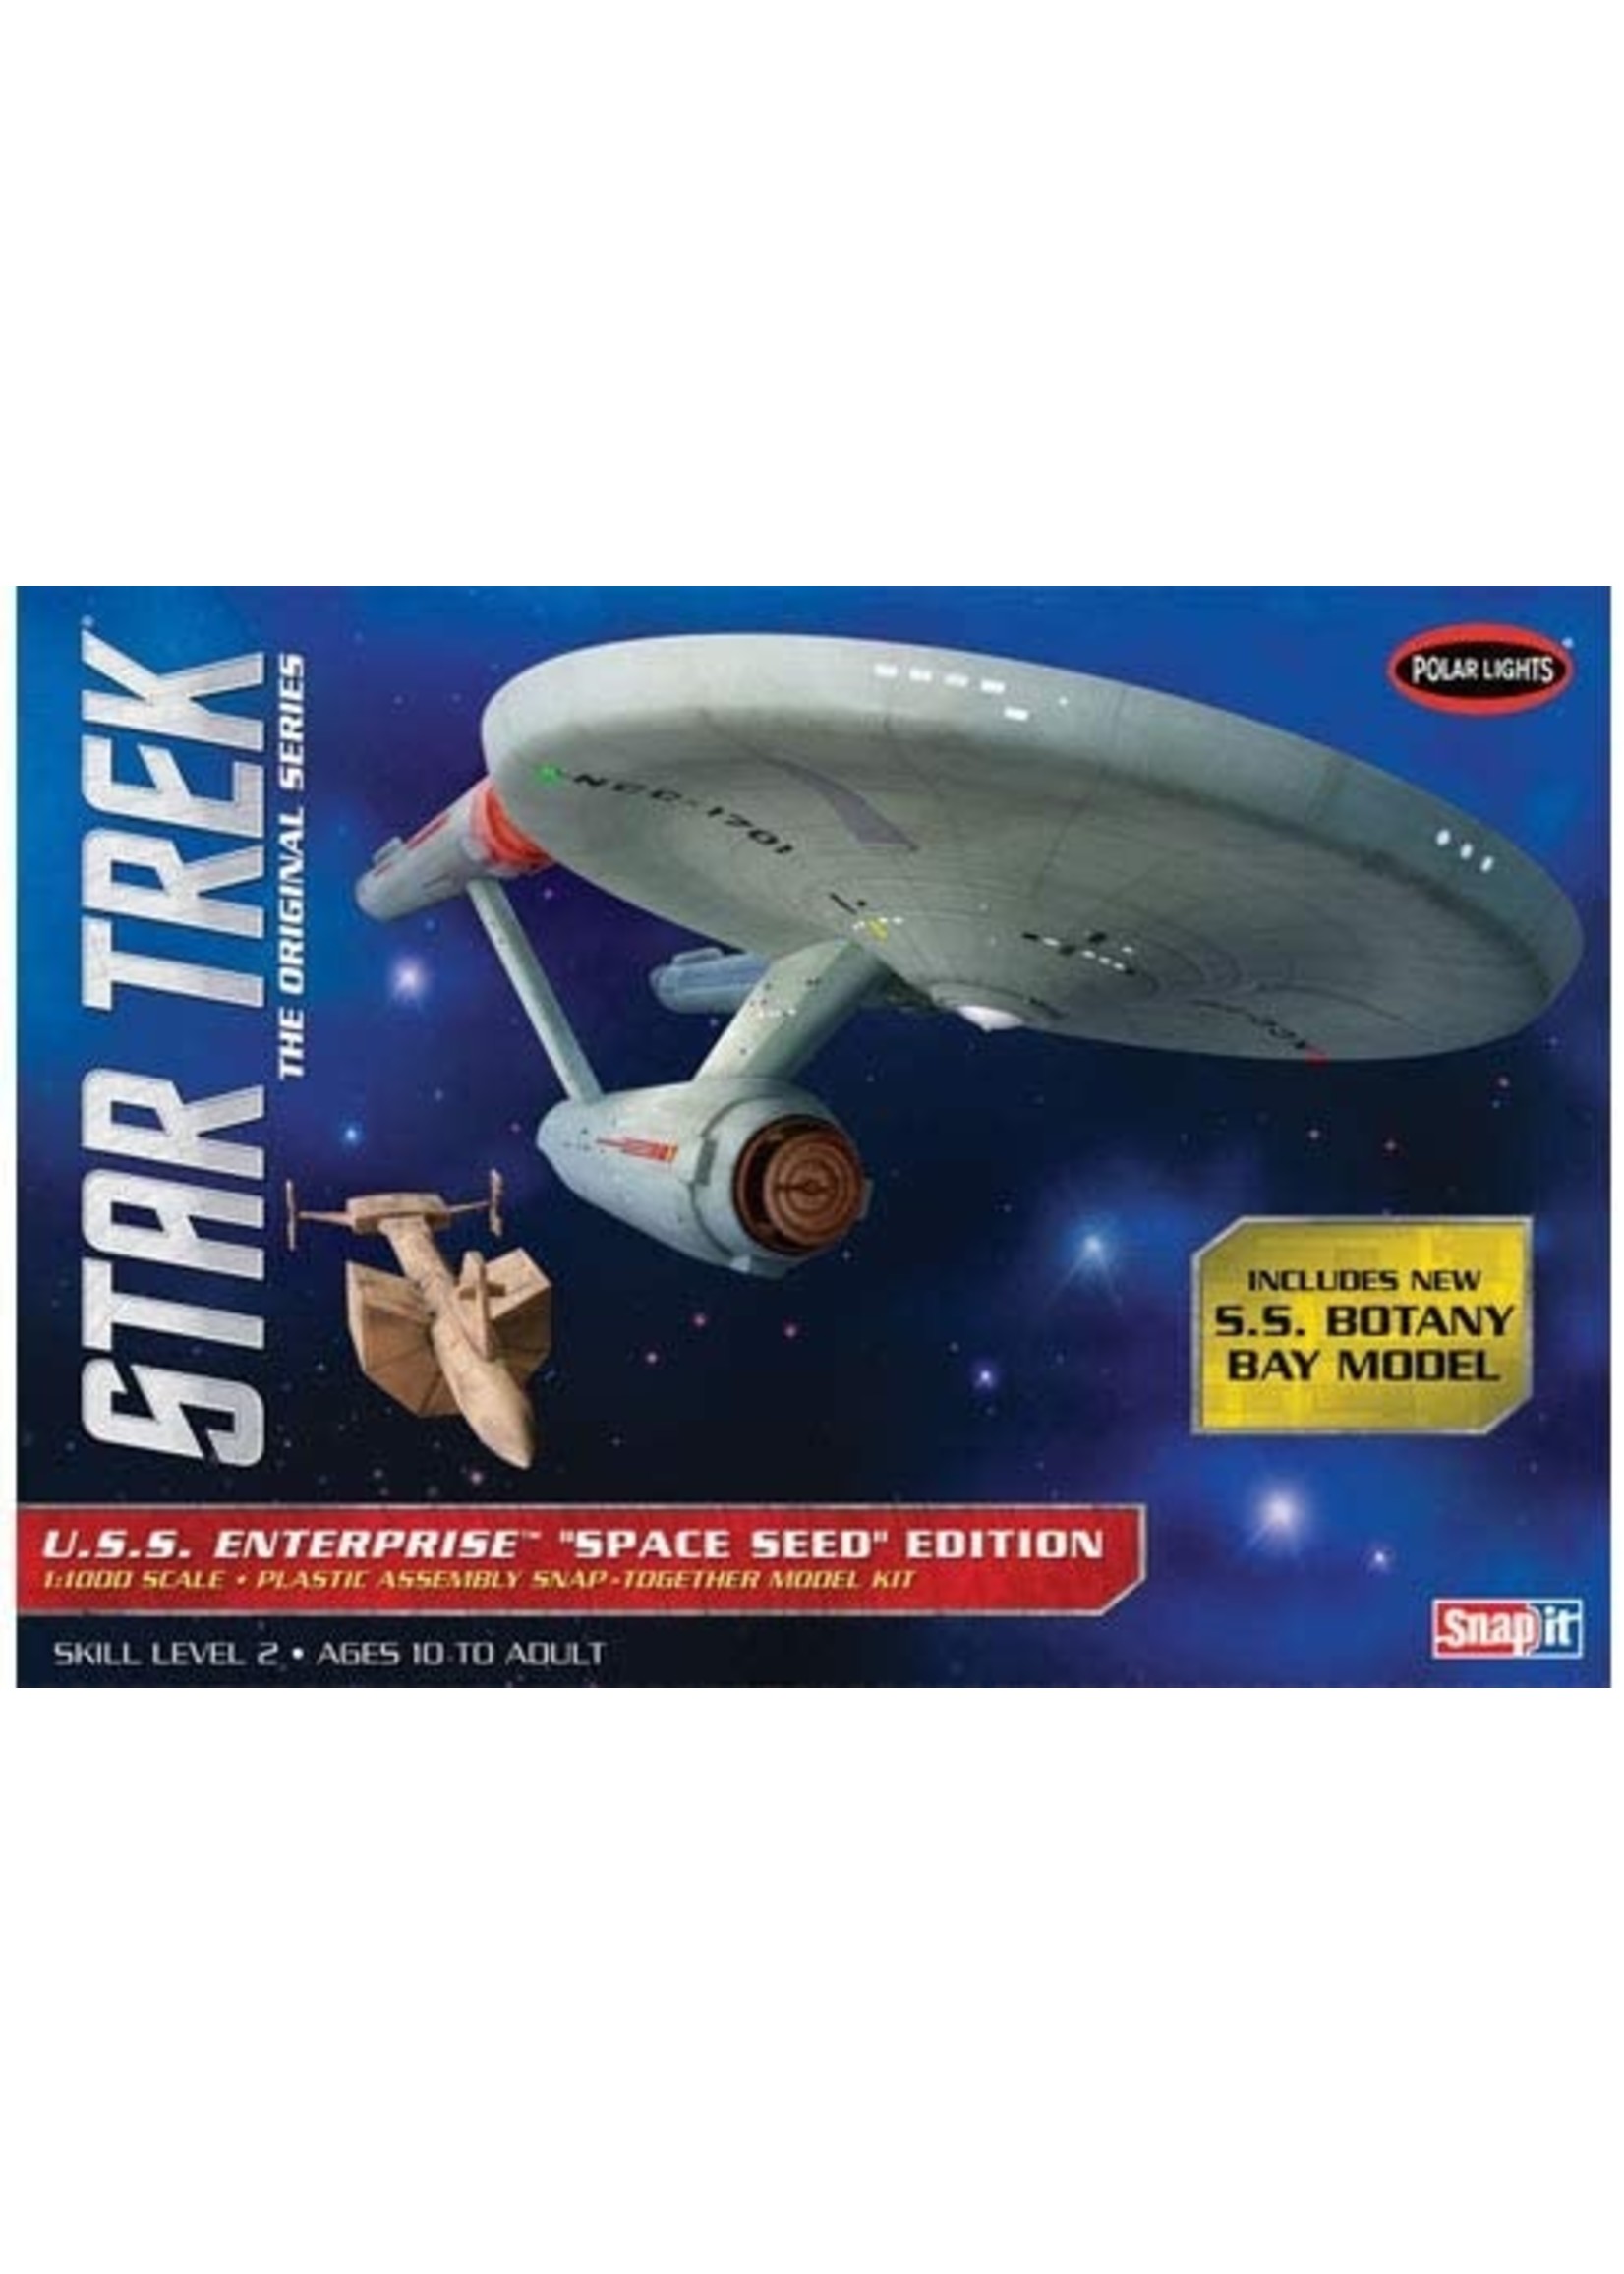 Polar Lights 908 - 1/100 Star Trek TOS U.S.S. Enterprise "Space Seed" Edition